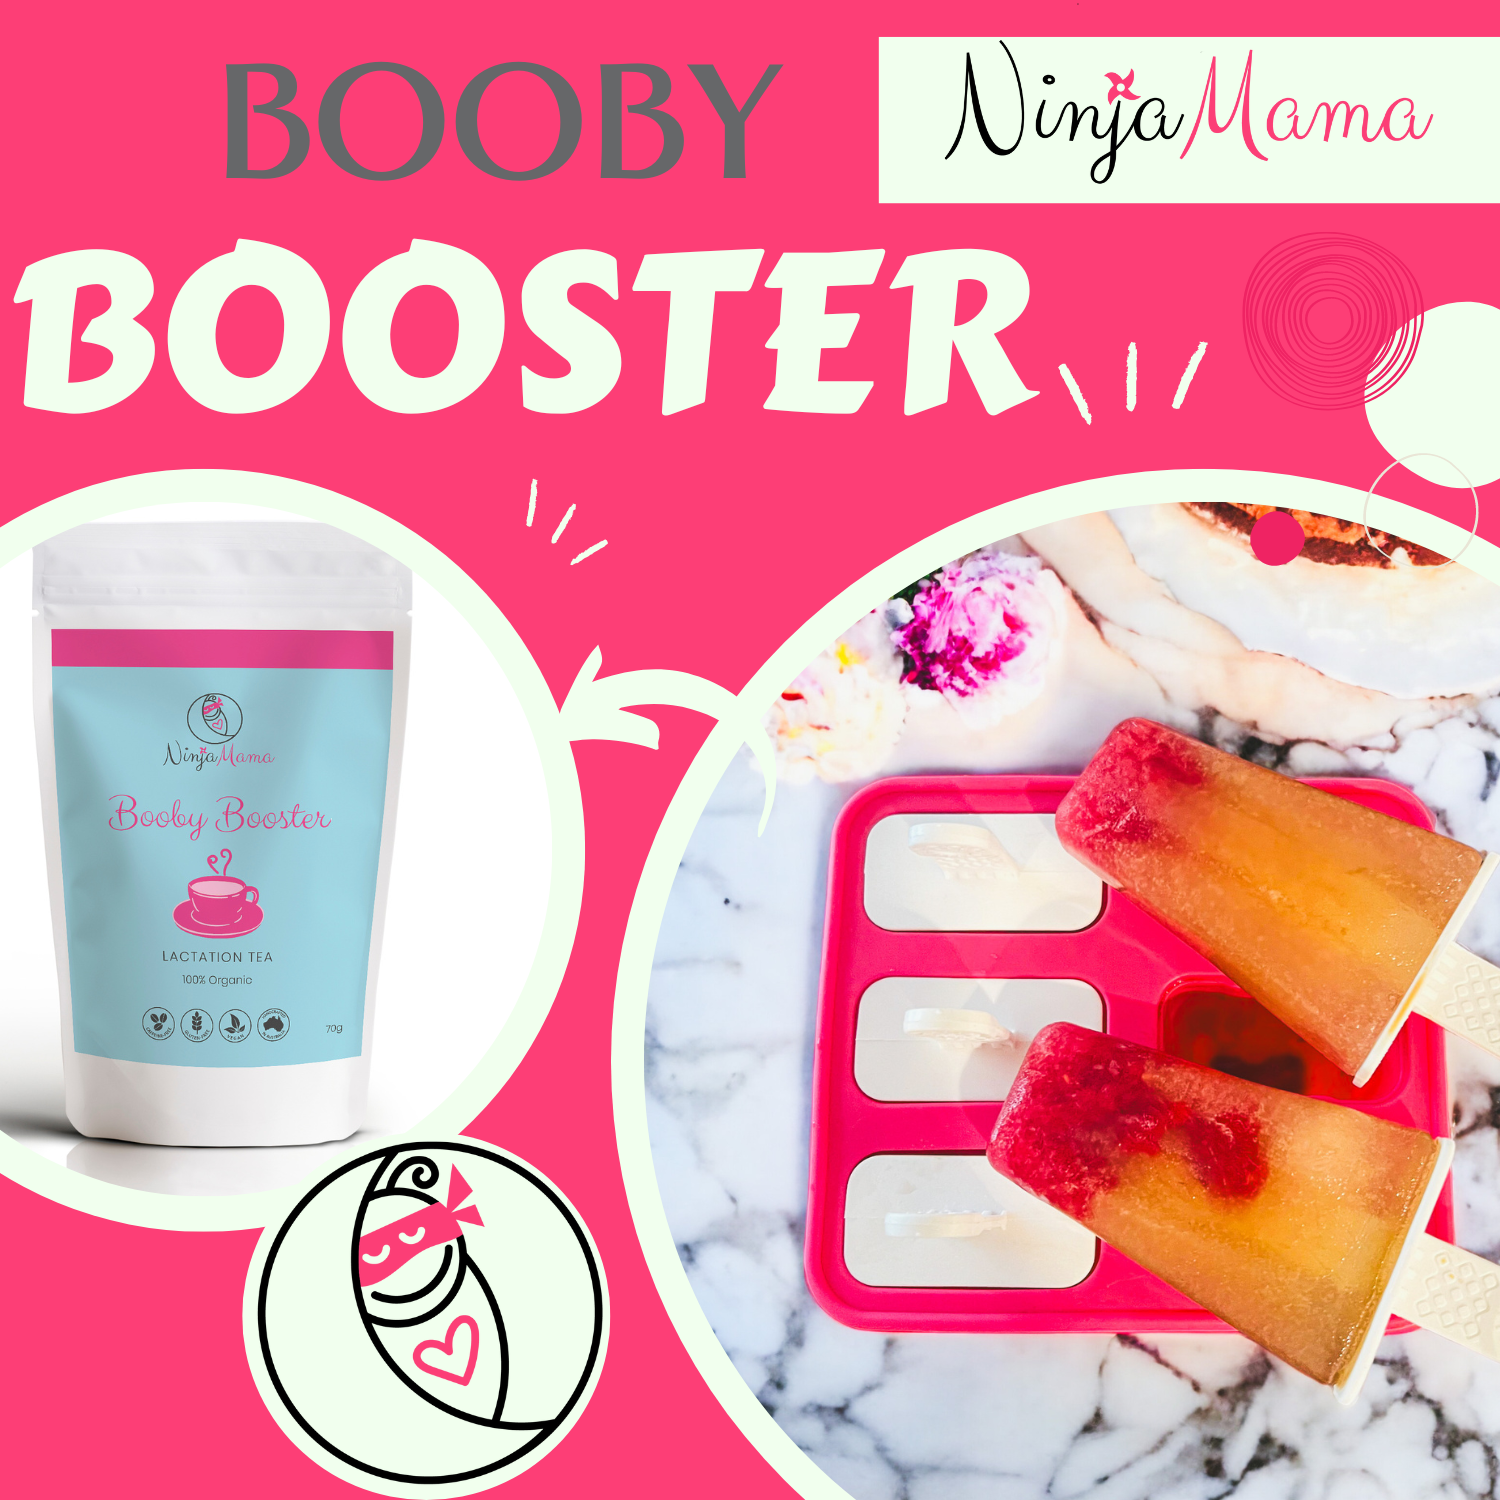 Ninja Mama Booby Booster Lactation Loose Leaf Tea 70g - for Breastfeed